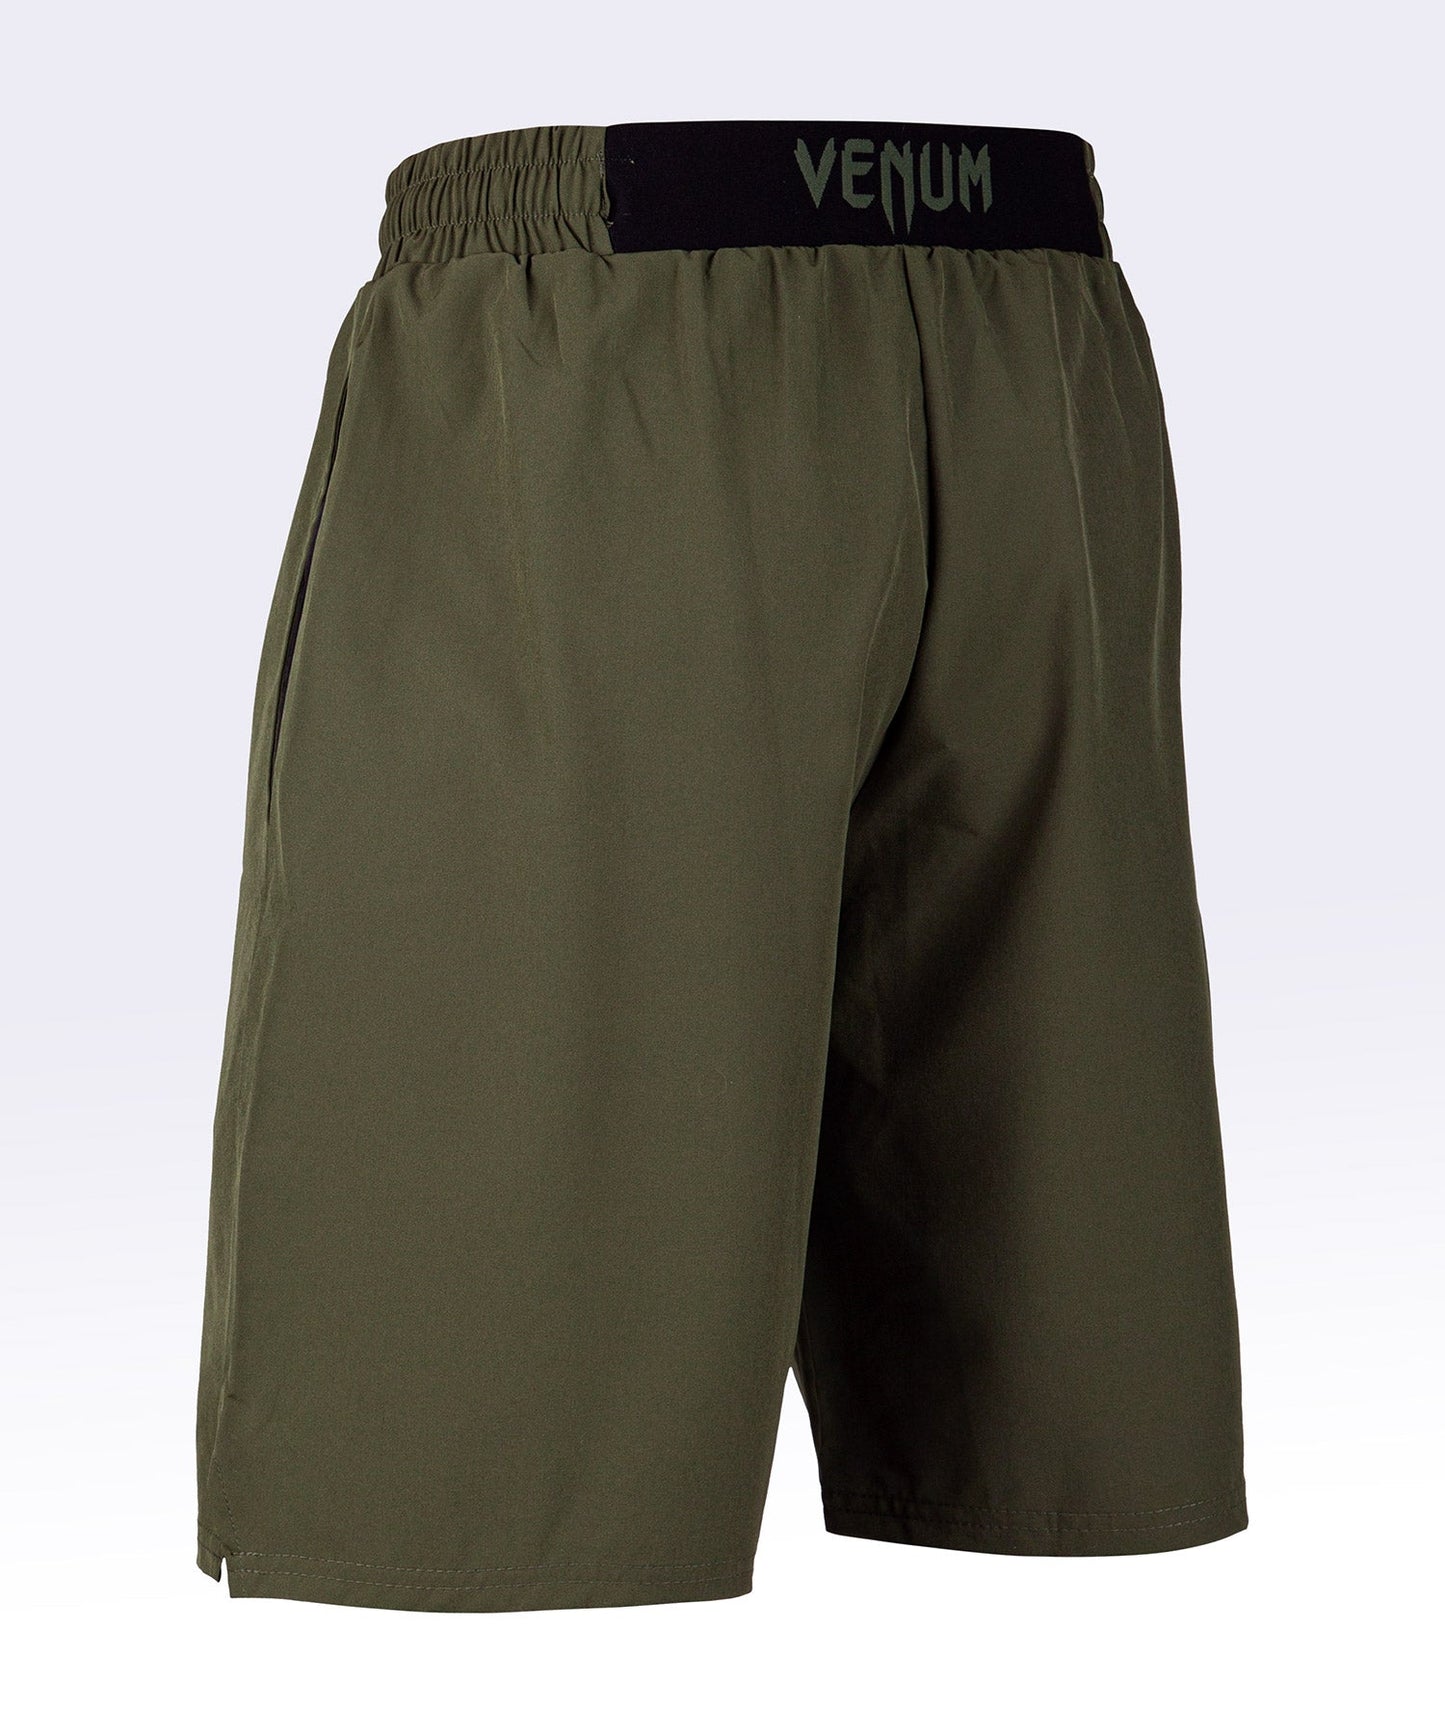 Venum Classic Training Shorts - Khaki